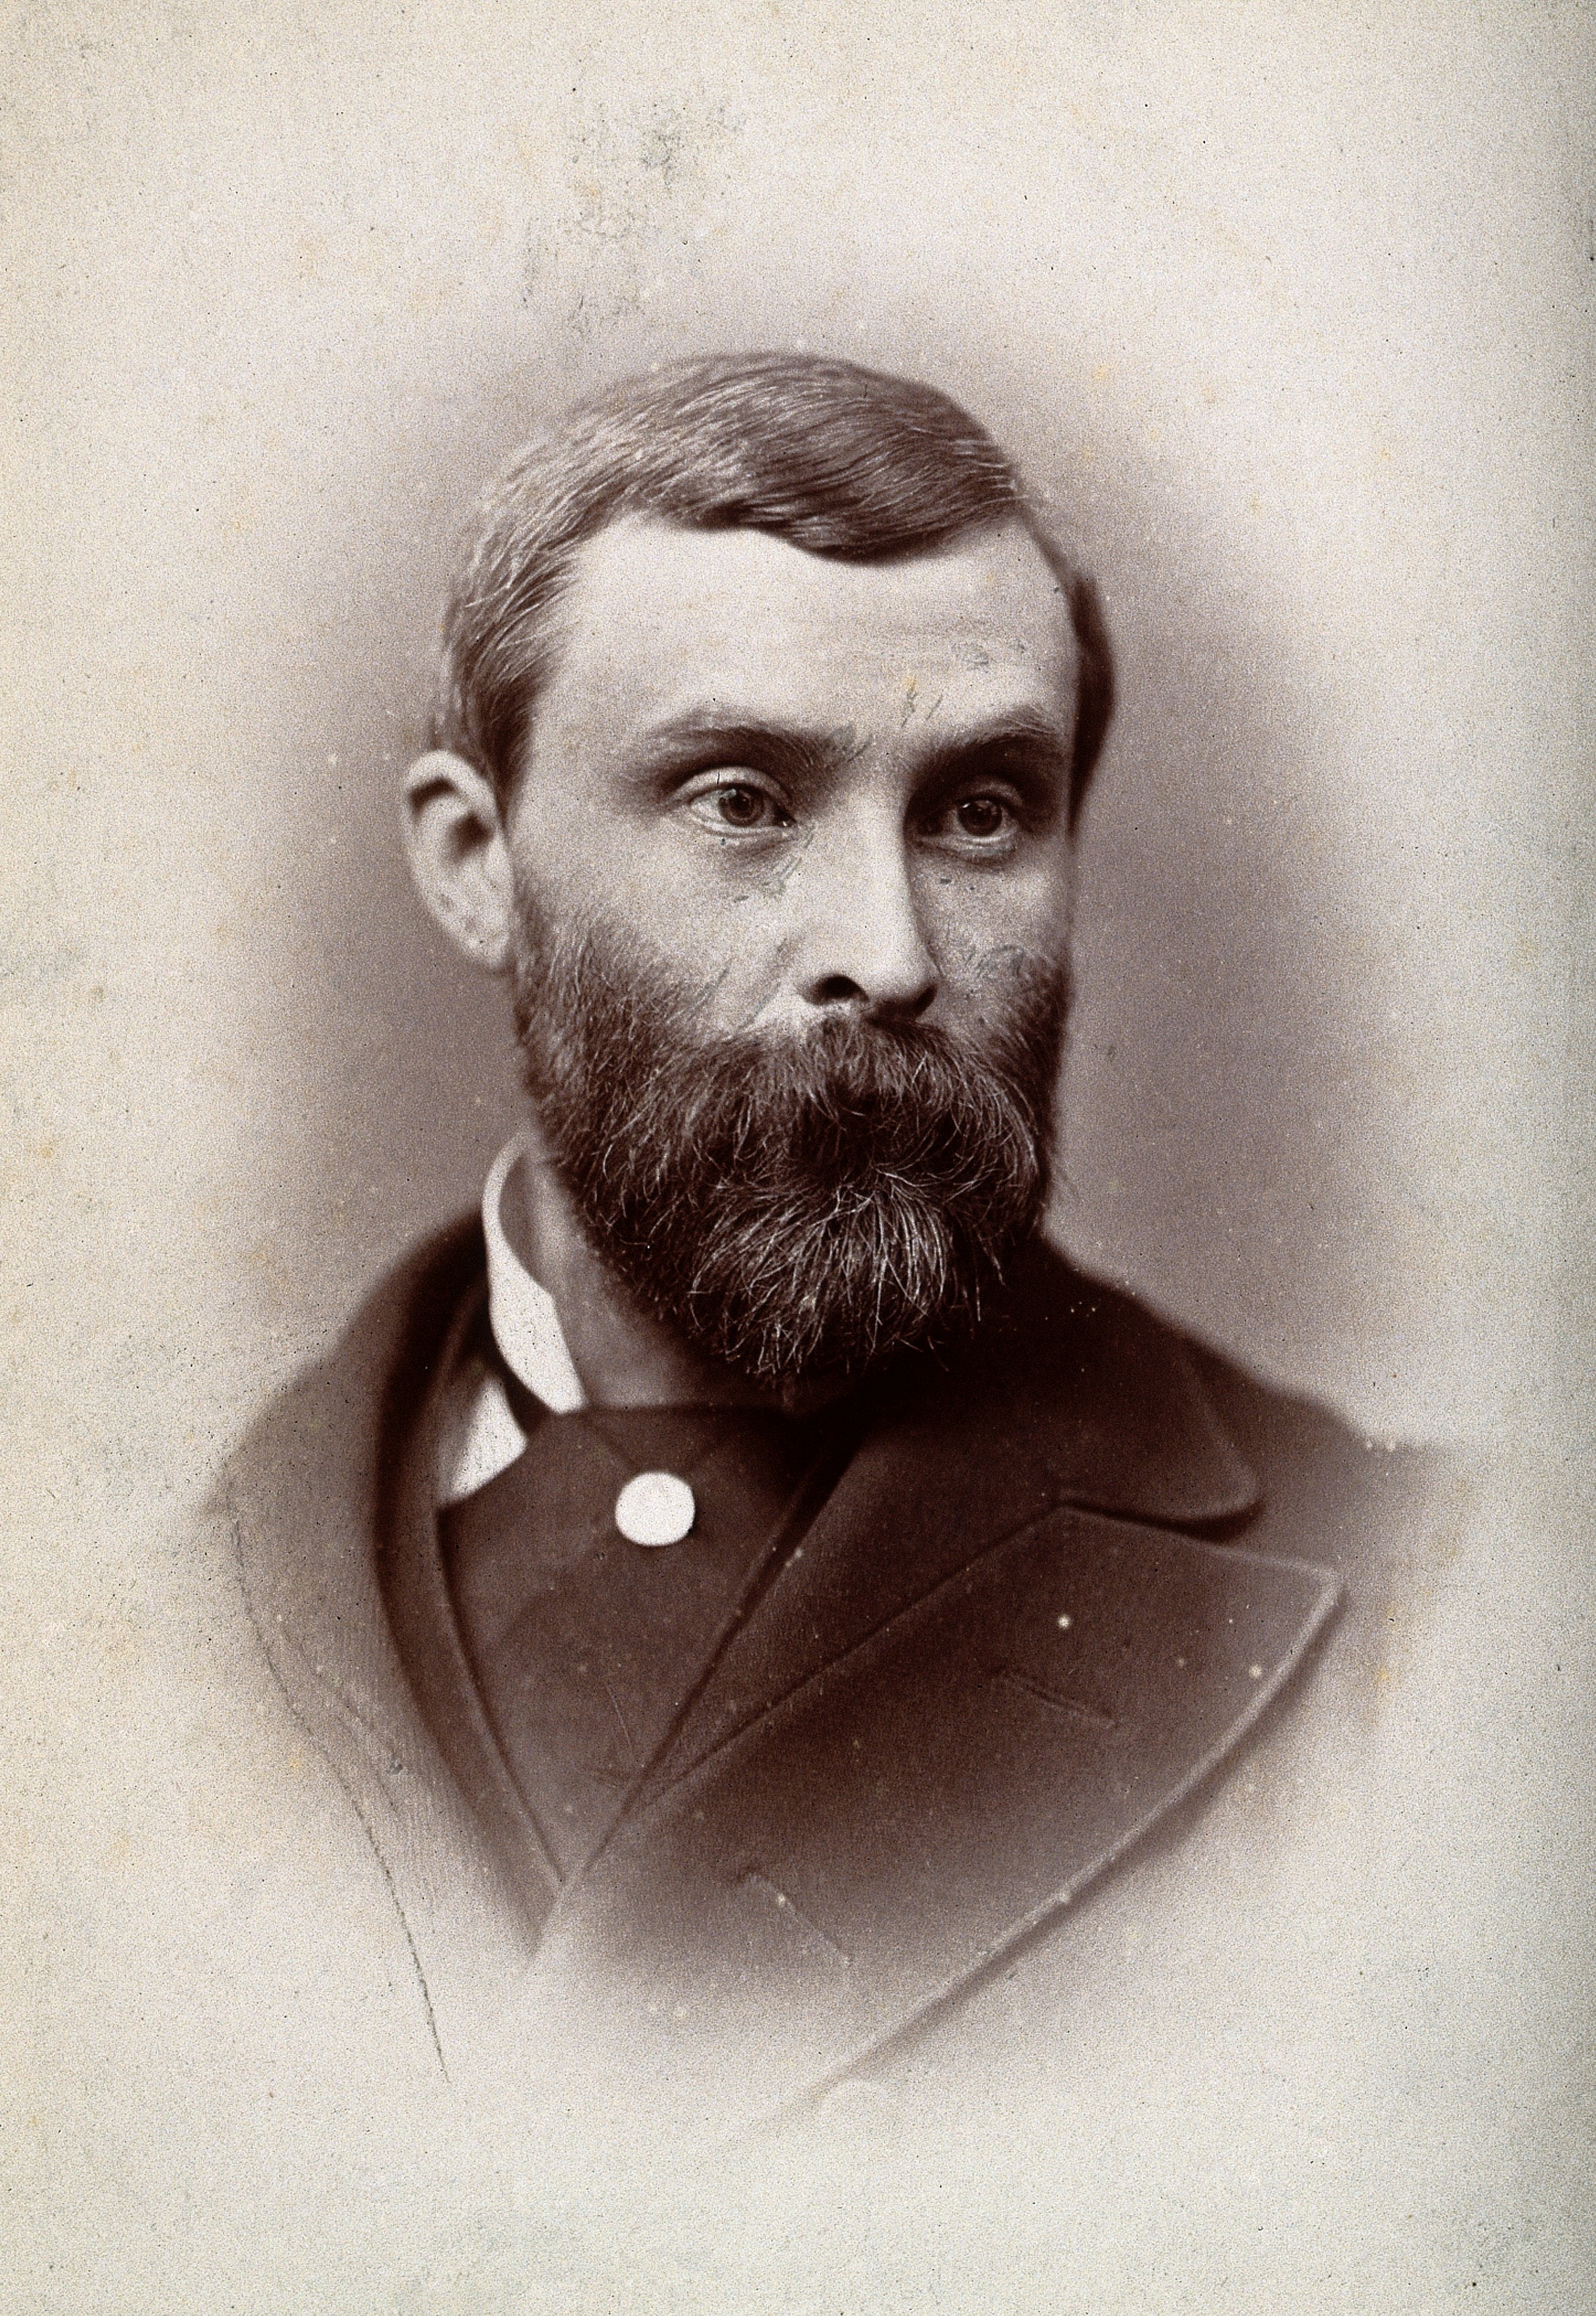 Sir Thomas Lauder Brunton. Photograph by G. Jerrard, 1881. Wellcome V0026106